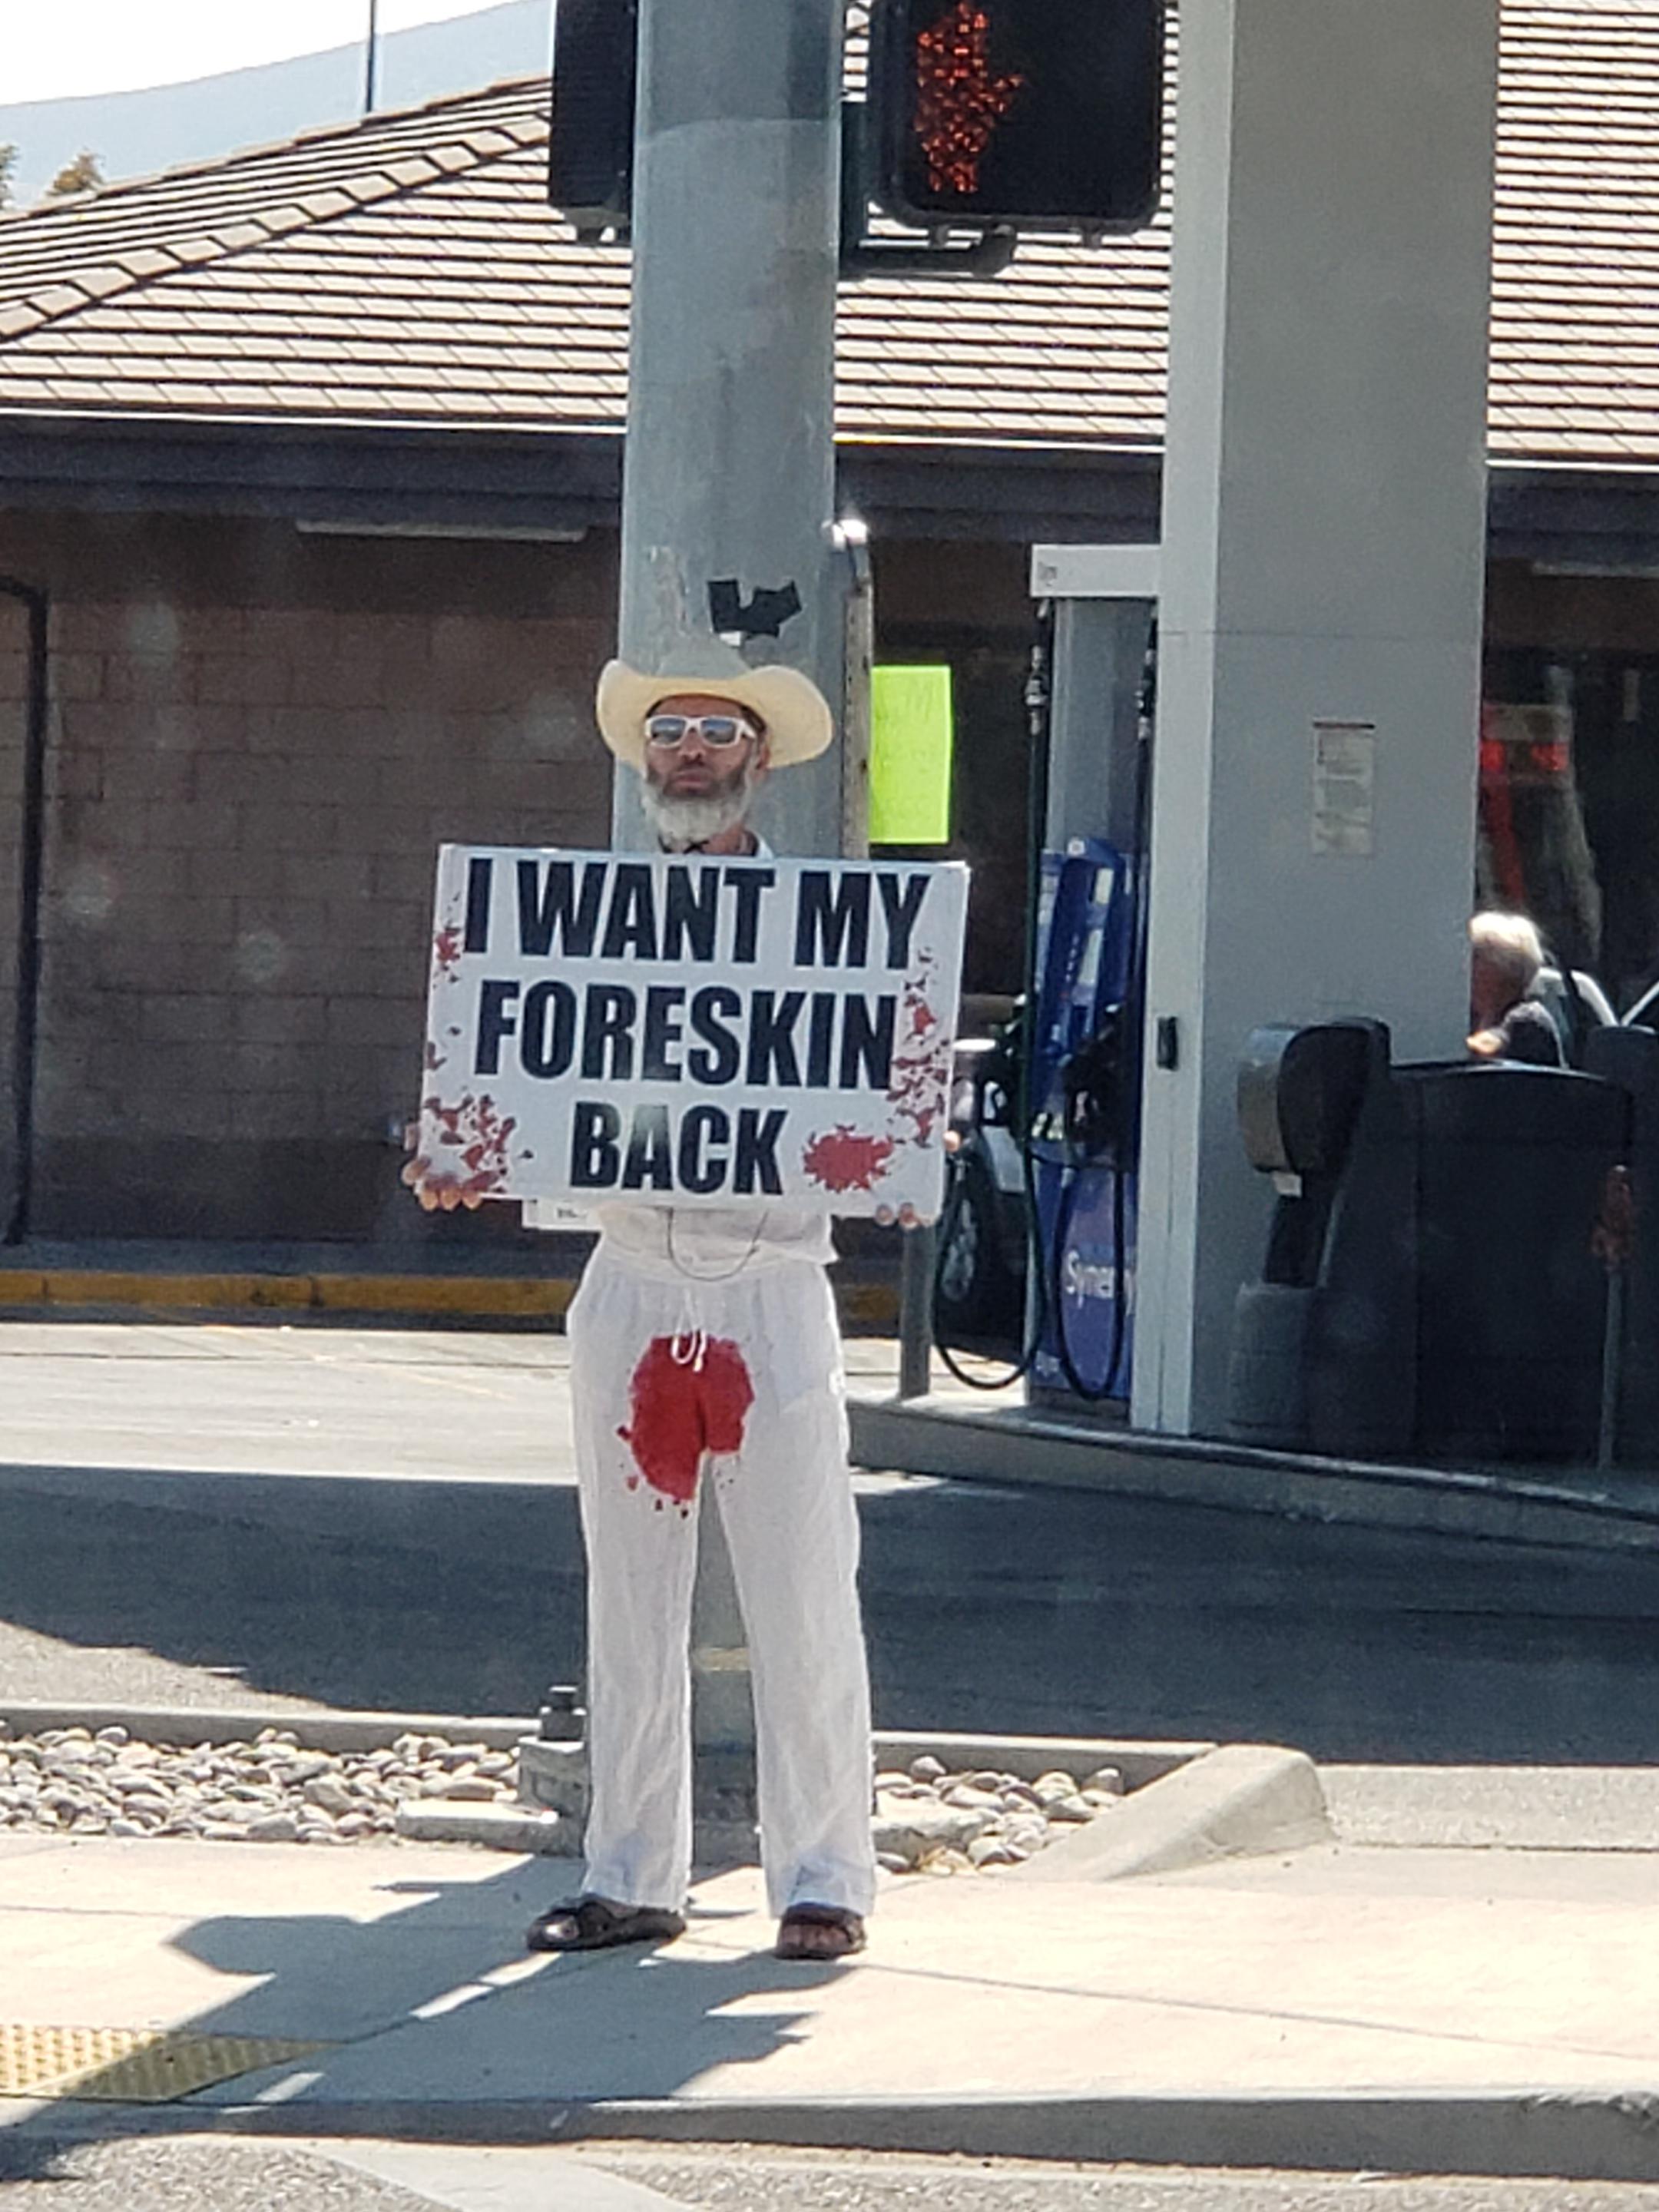 street - J Want My Foreskin A Back